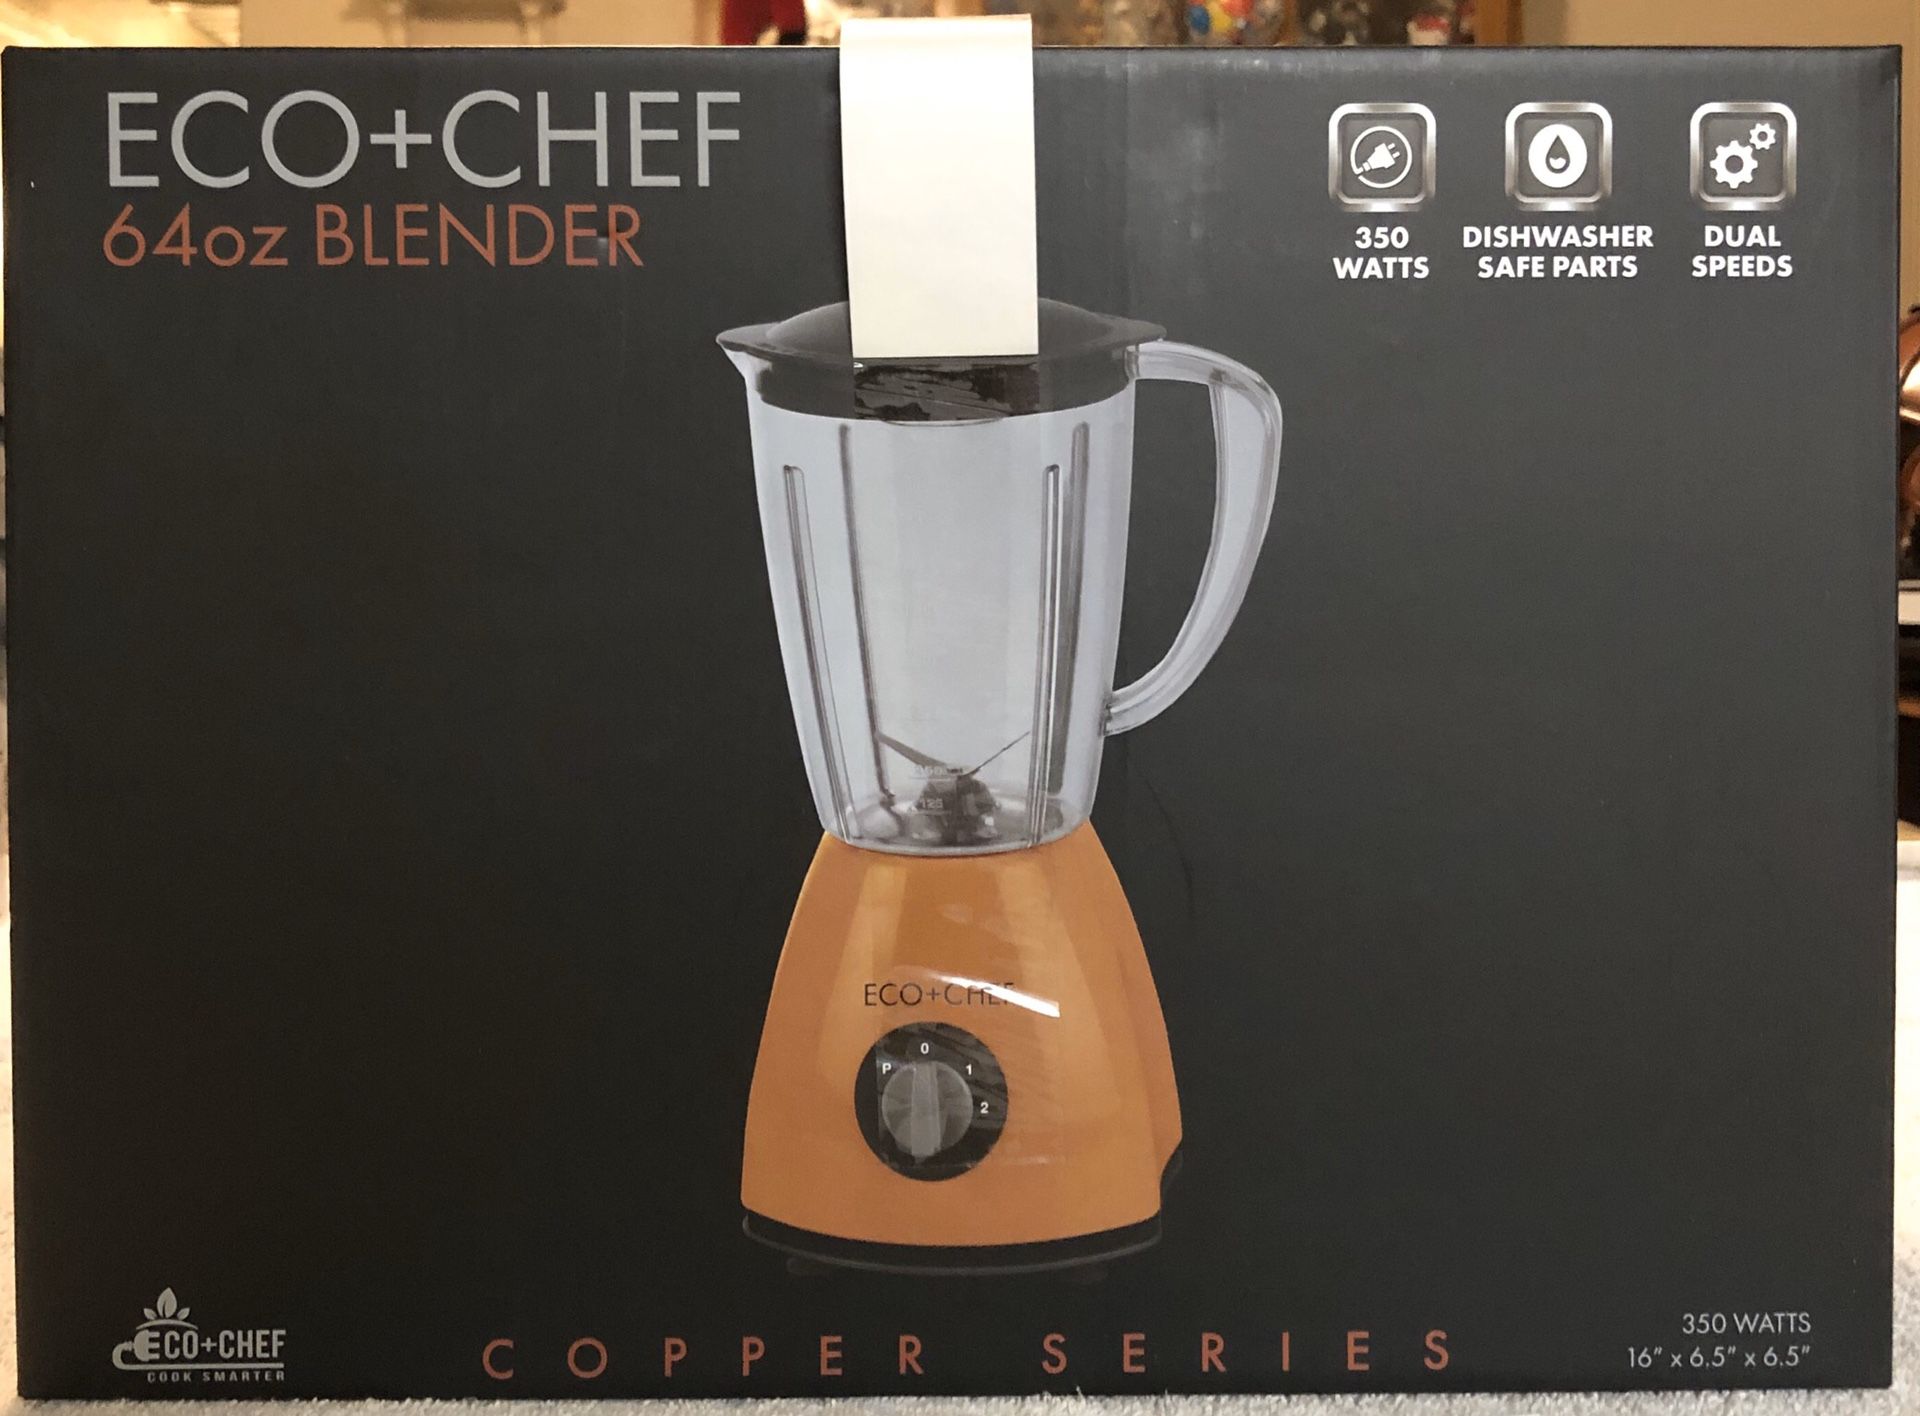 ECO+CHEF 64 oz. Blender, Copper Series